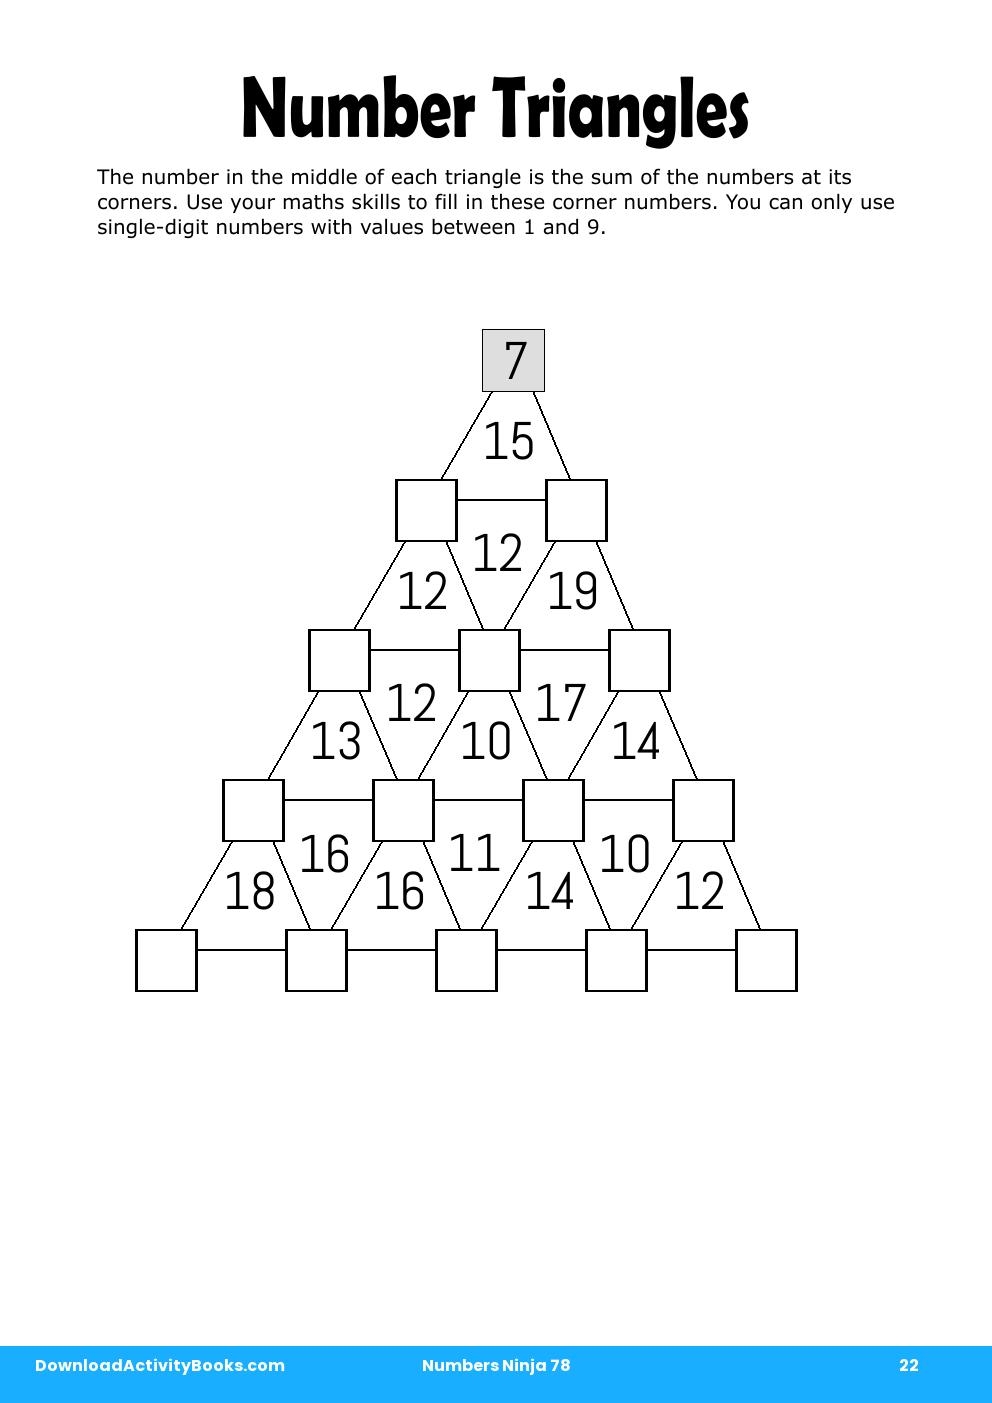 Number Triangles in Numbers Ninja 78